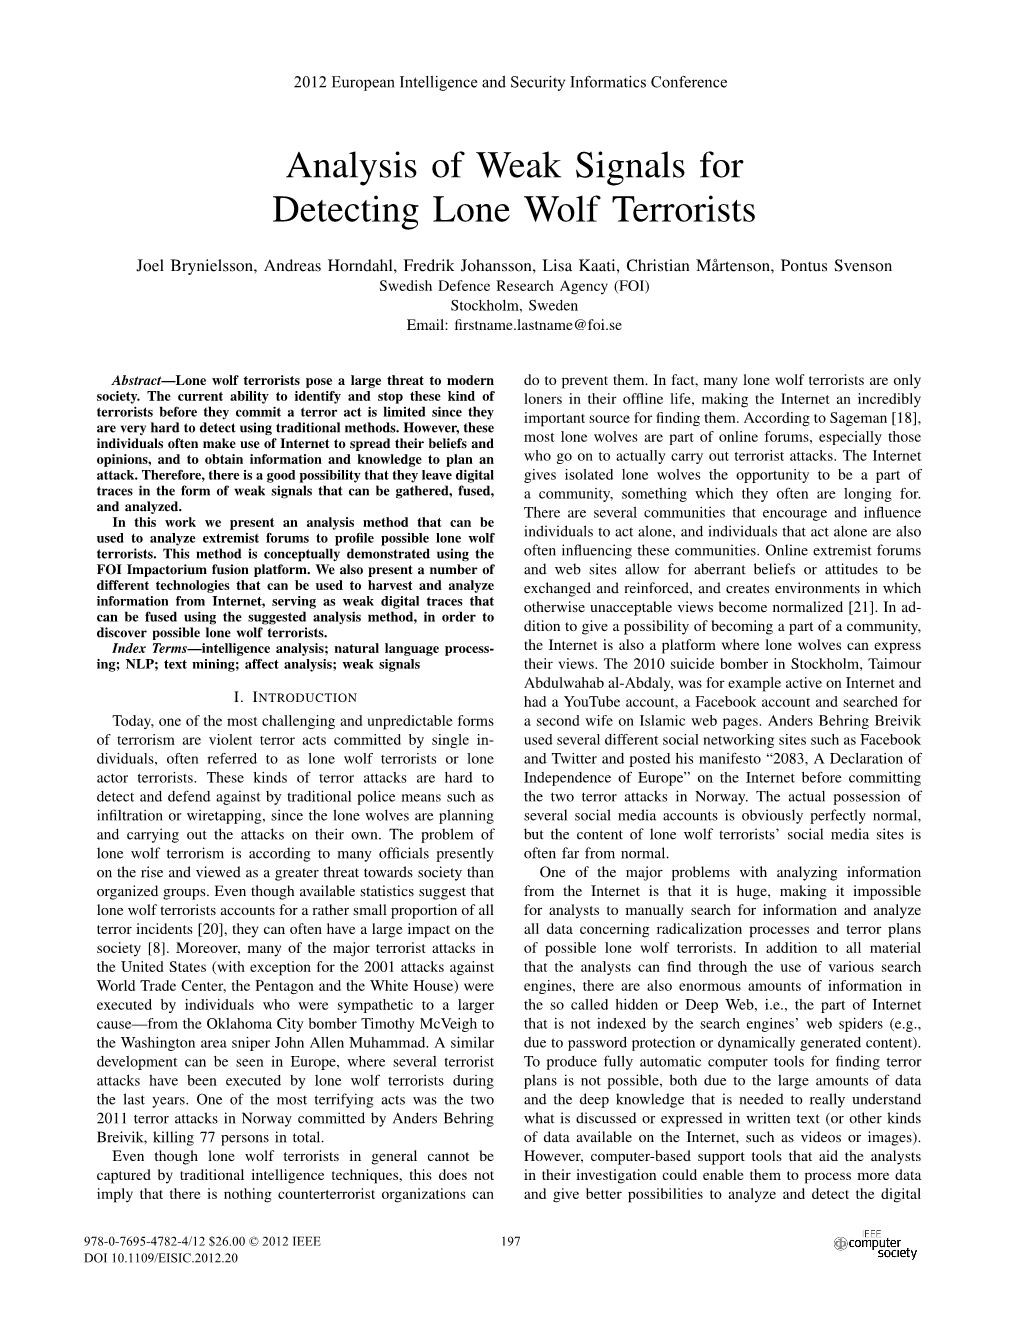 Analysis of Weak Signals for Detecting Lone Wolf Terrorists